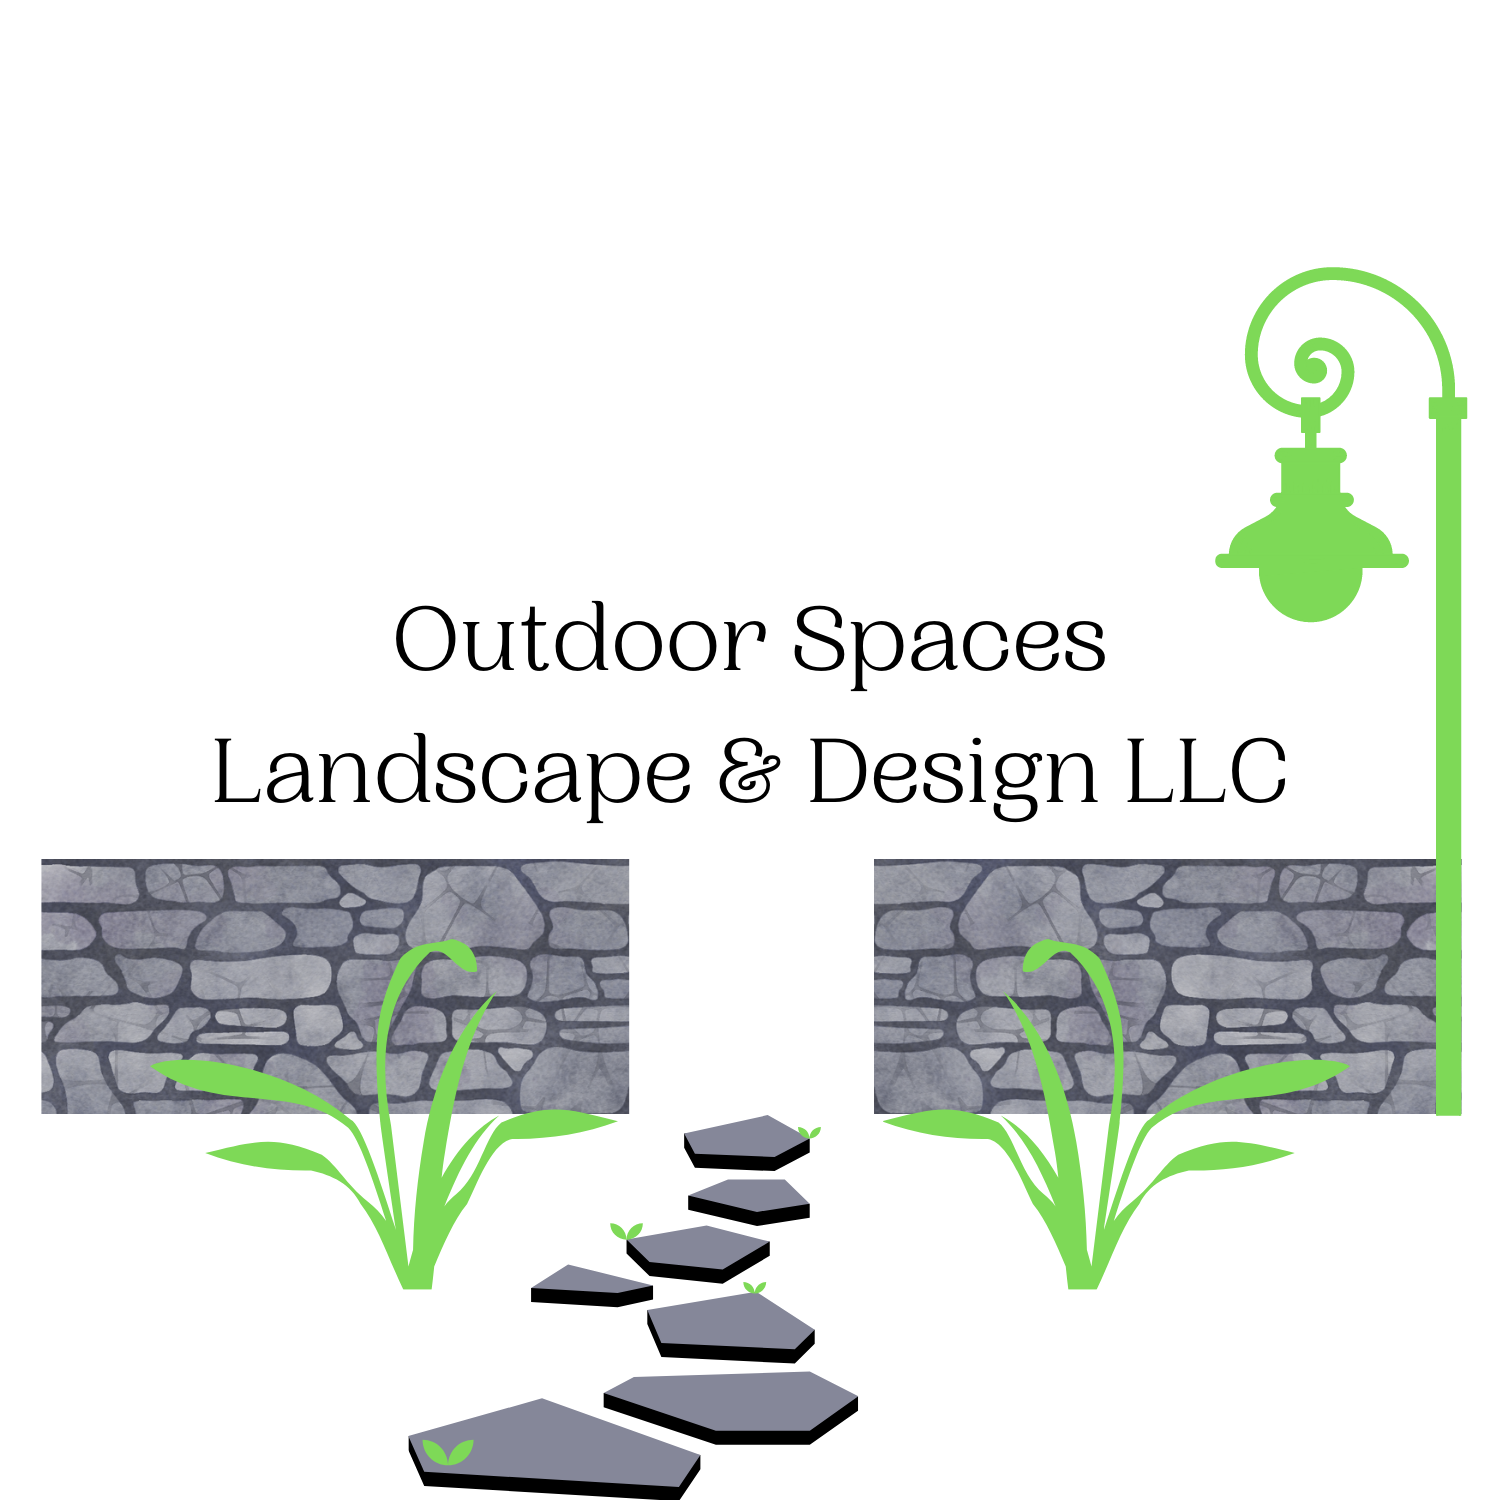 Outdoor Spaces Landscape & Design, LLC Logo